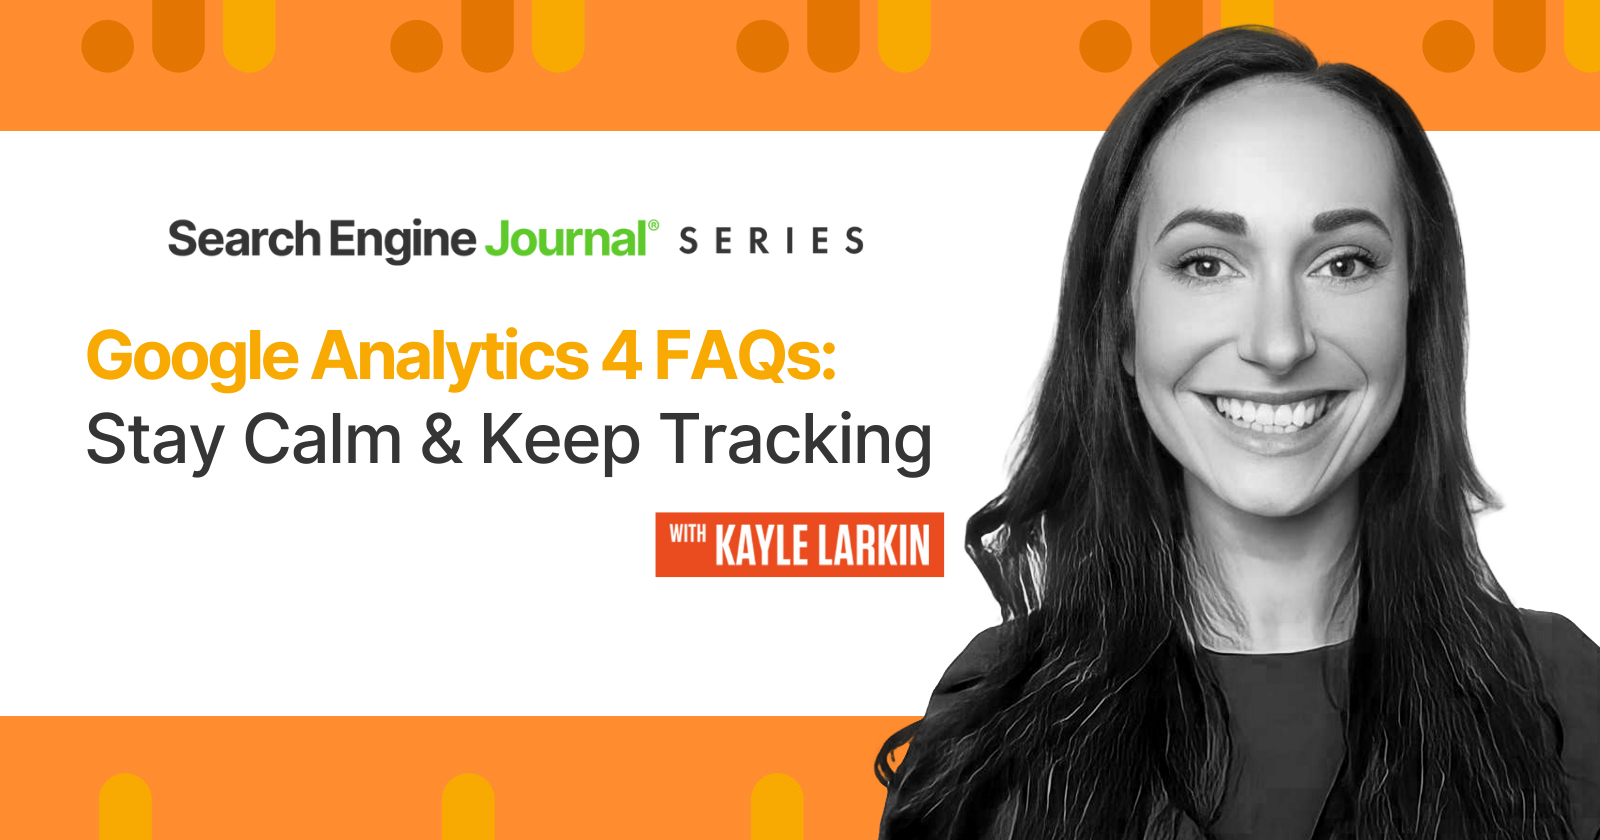 Google Analytics 4 FAQs: Stay Calm & Keep Tracking  via @sejournal, @KayleLarkin